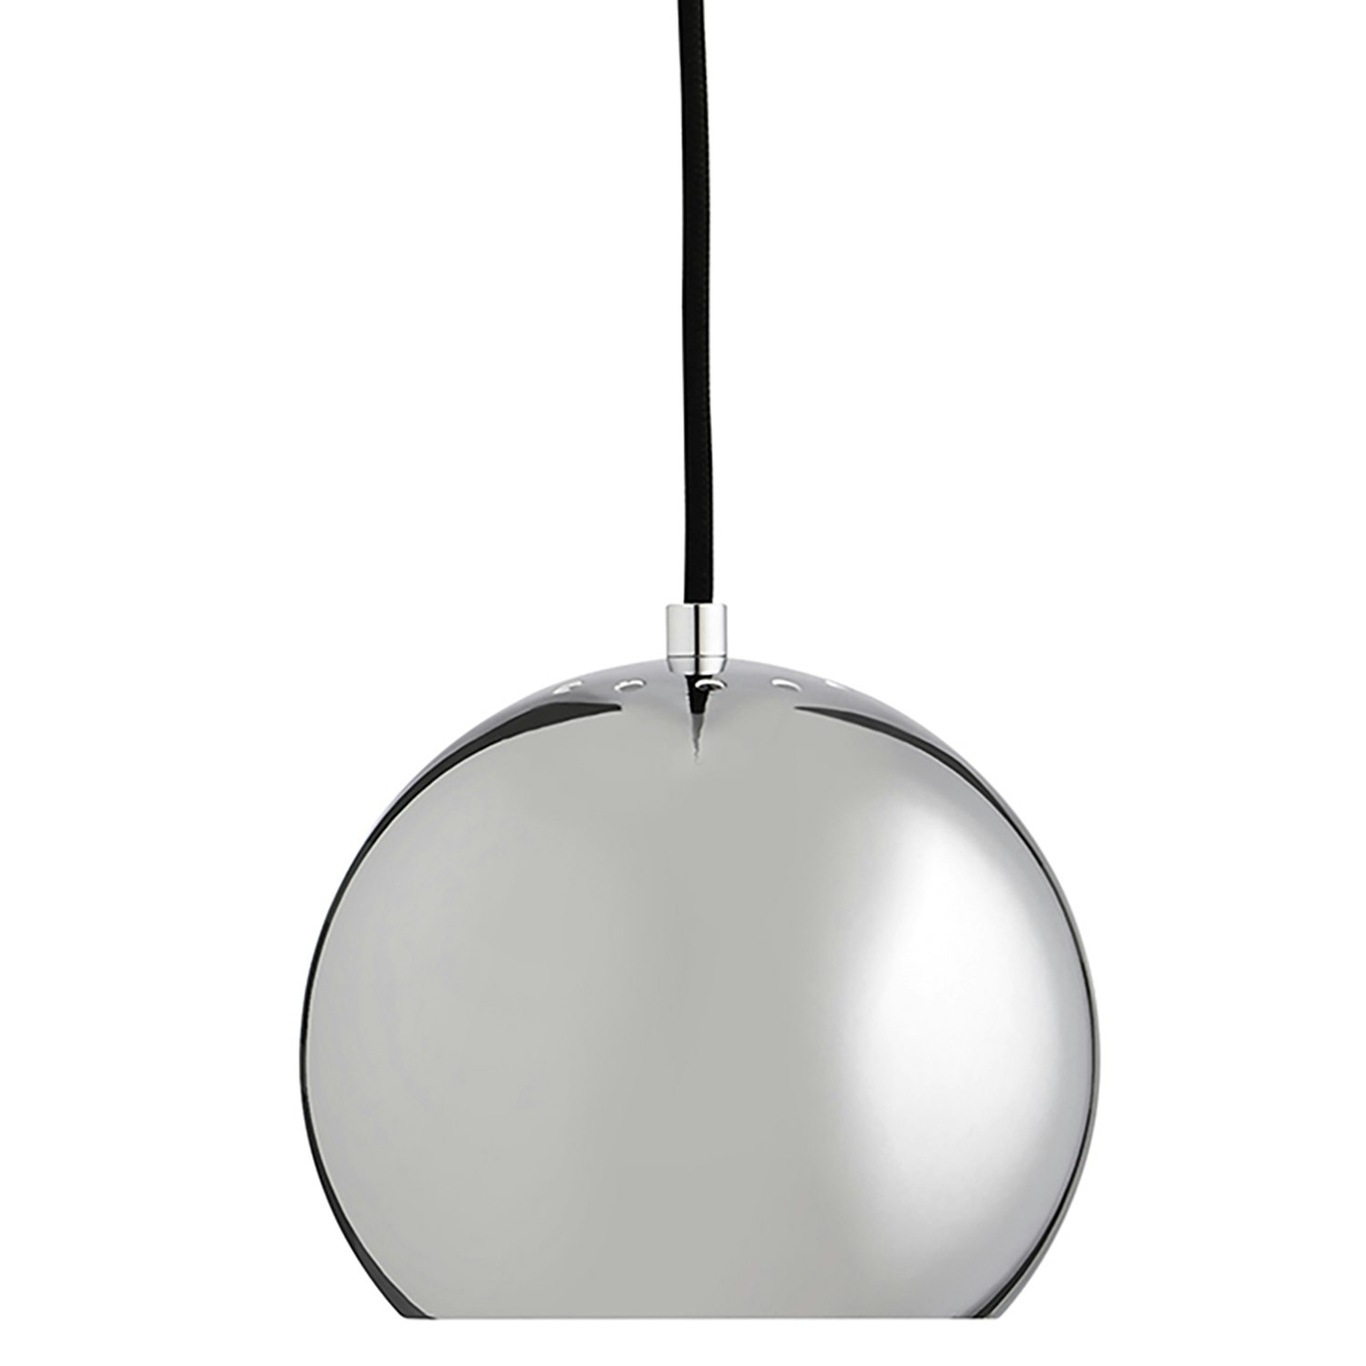 Ball Hanglamp 18 cm, Chroom